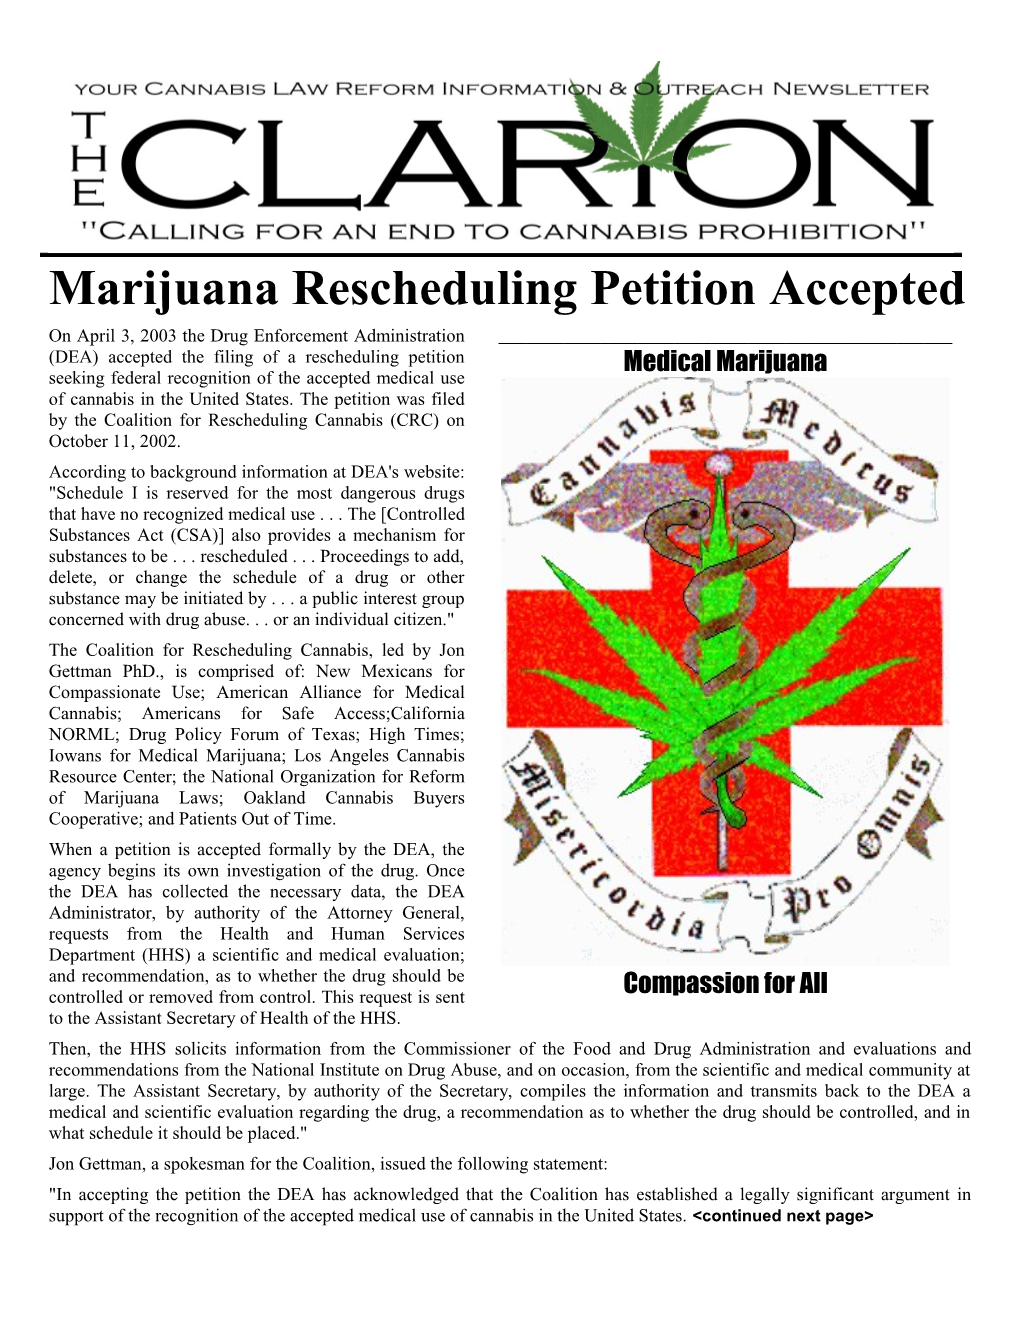 Marijuana Rescheduling Petition Accepted